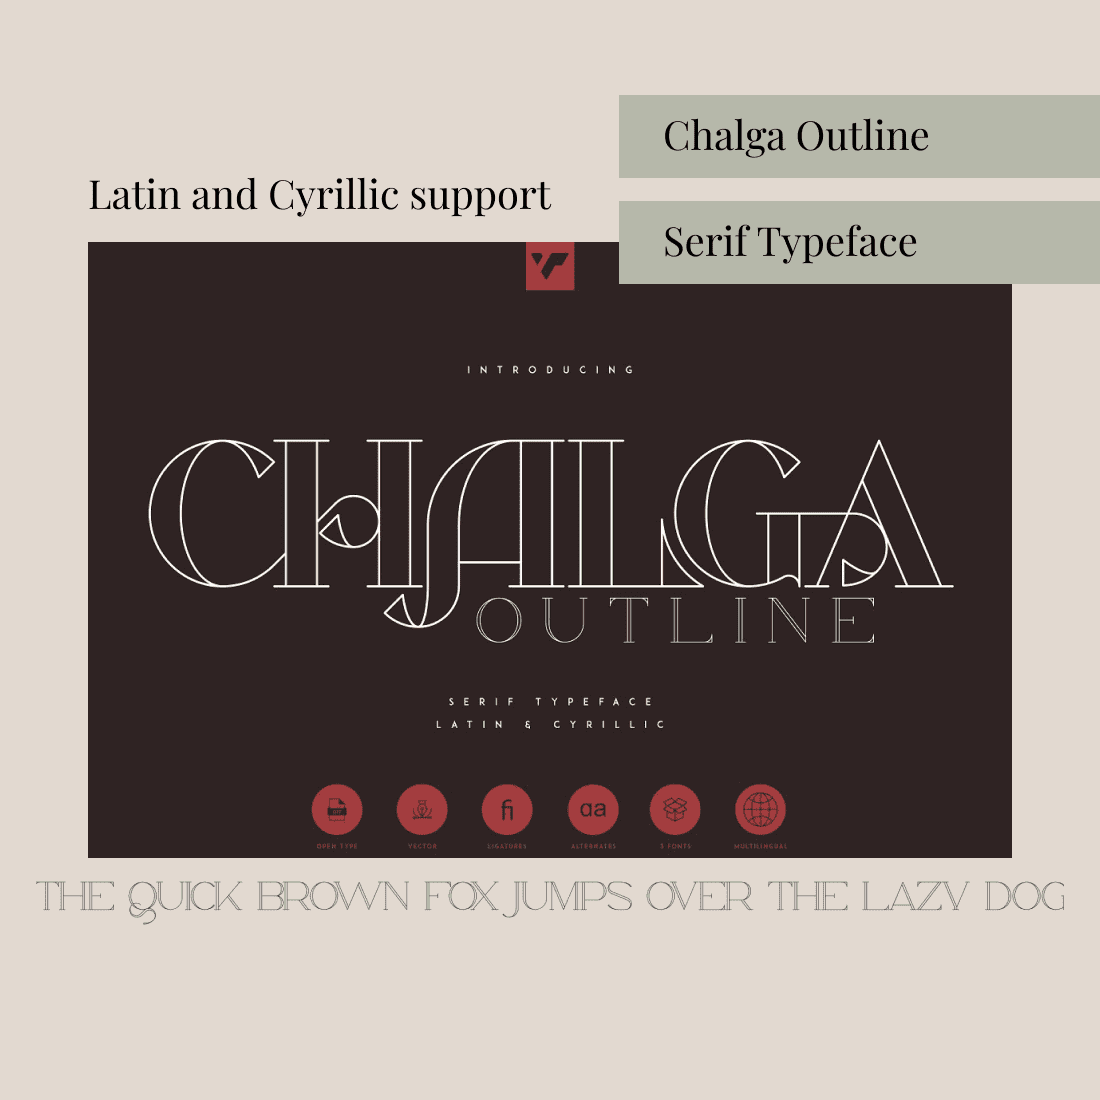 Chalga Outline - Serif Typeface.